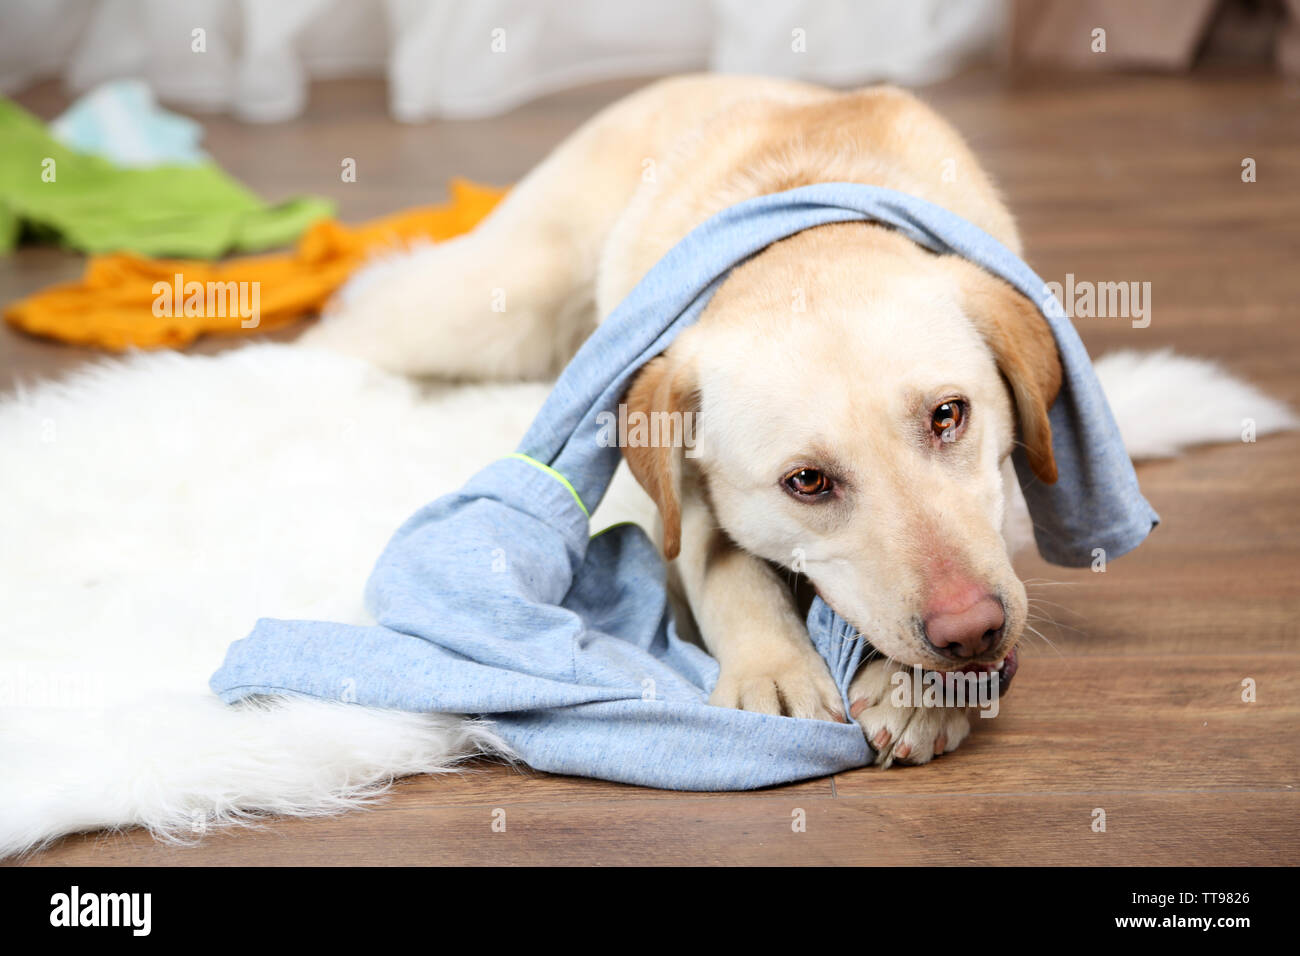 Dog in messy room Stock Photo